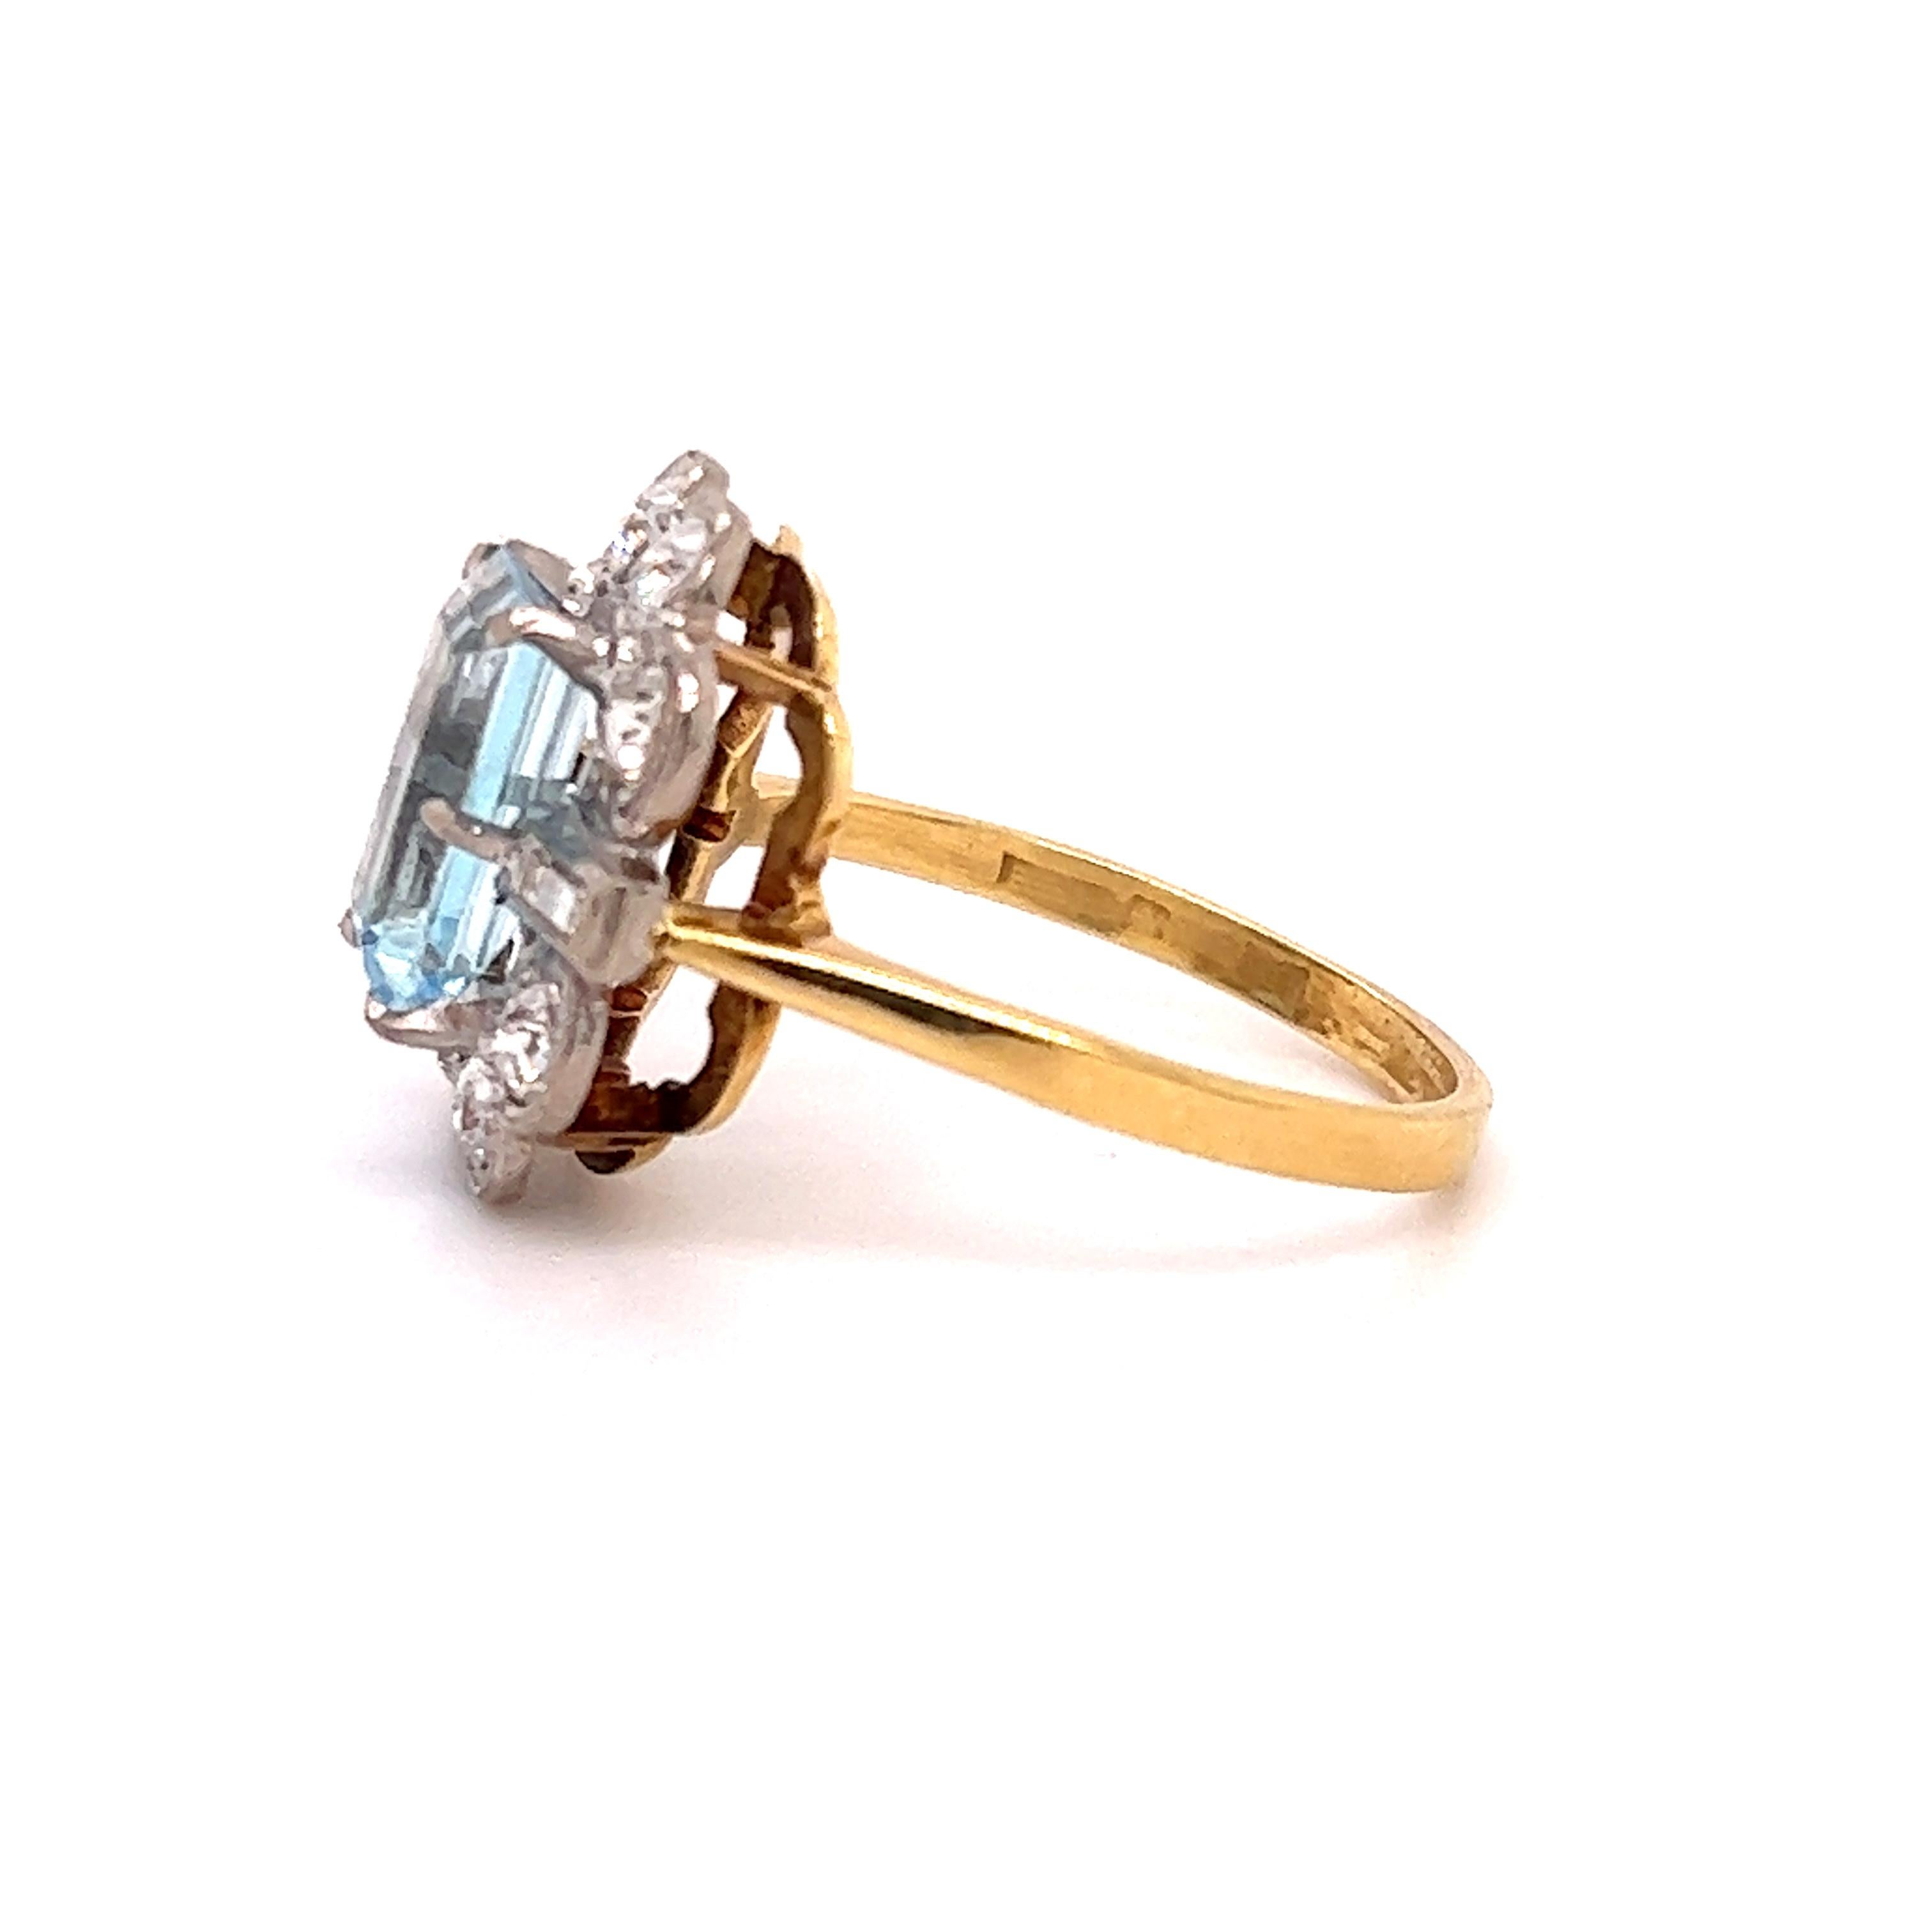 Old Mine Cut Victorian Aqua Marine Gemstone & Diamond Ring